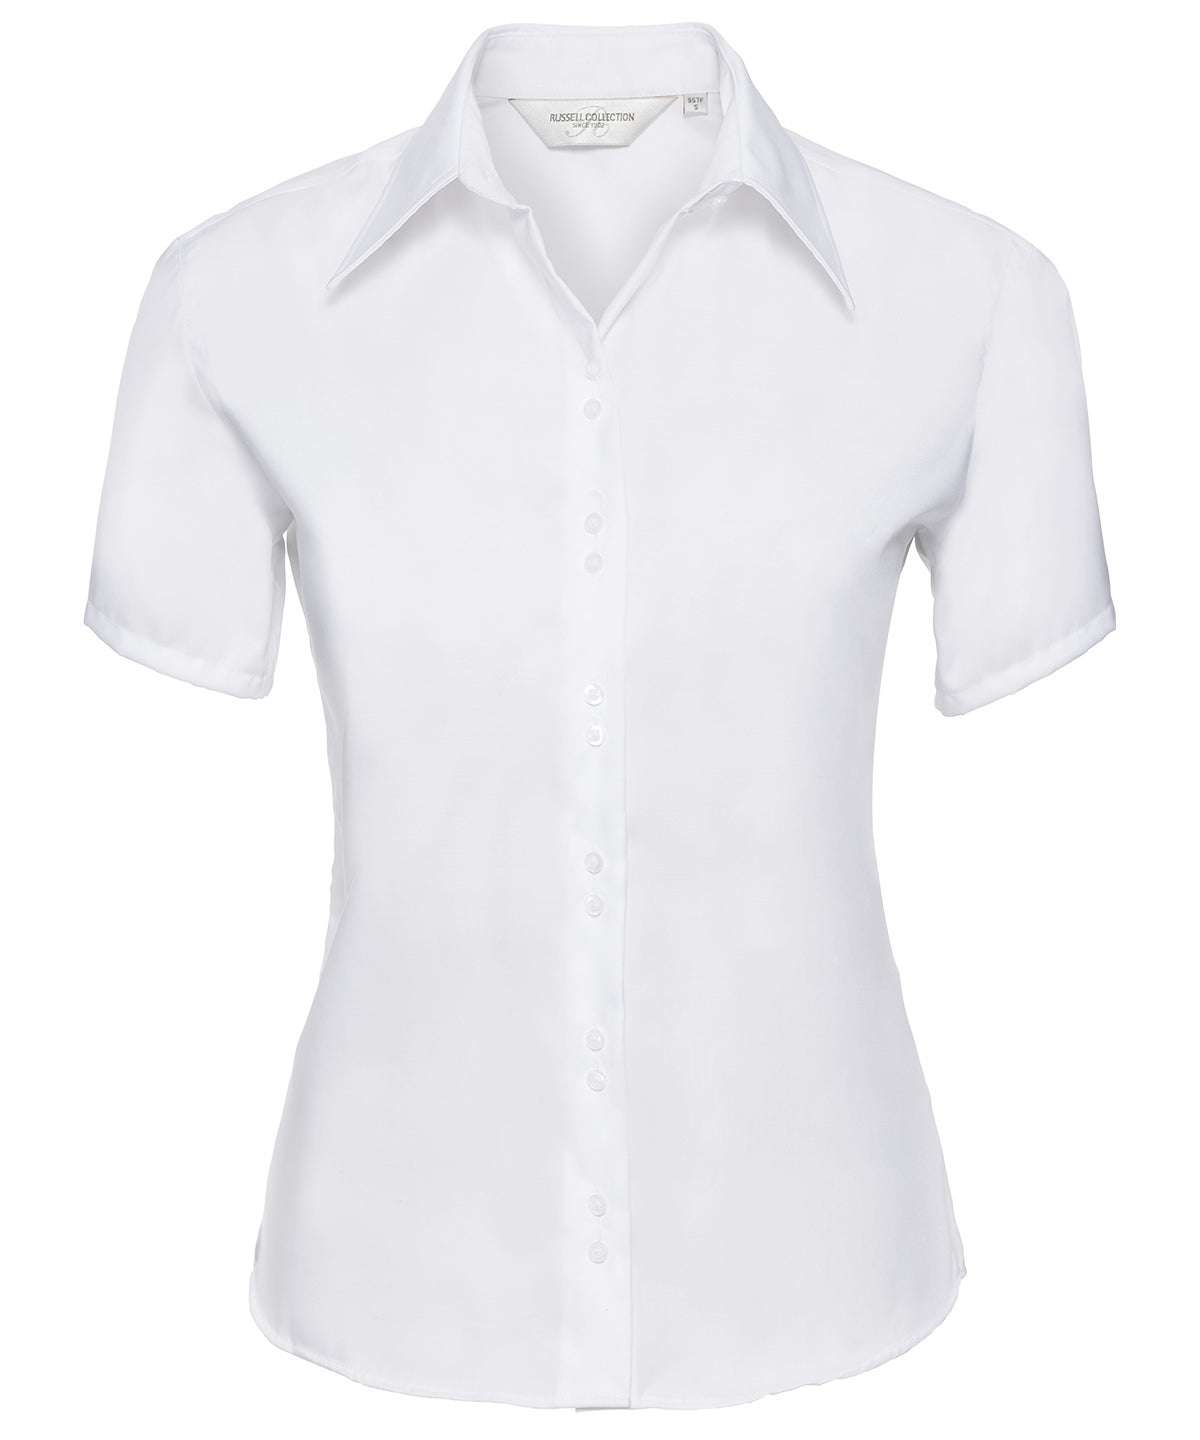 Bolir - Women's Short Sleeve Ultimate Non-iron Shirt